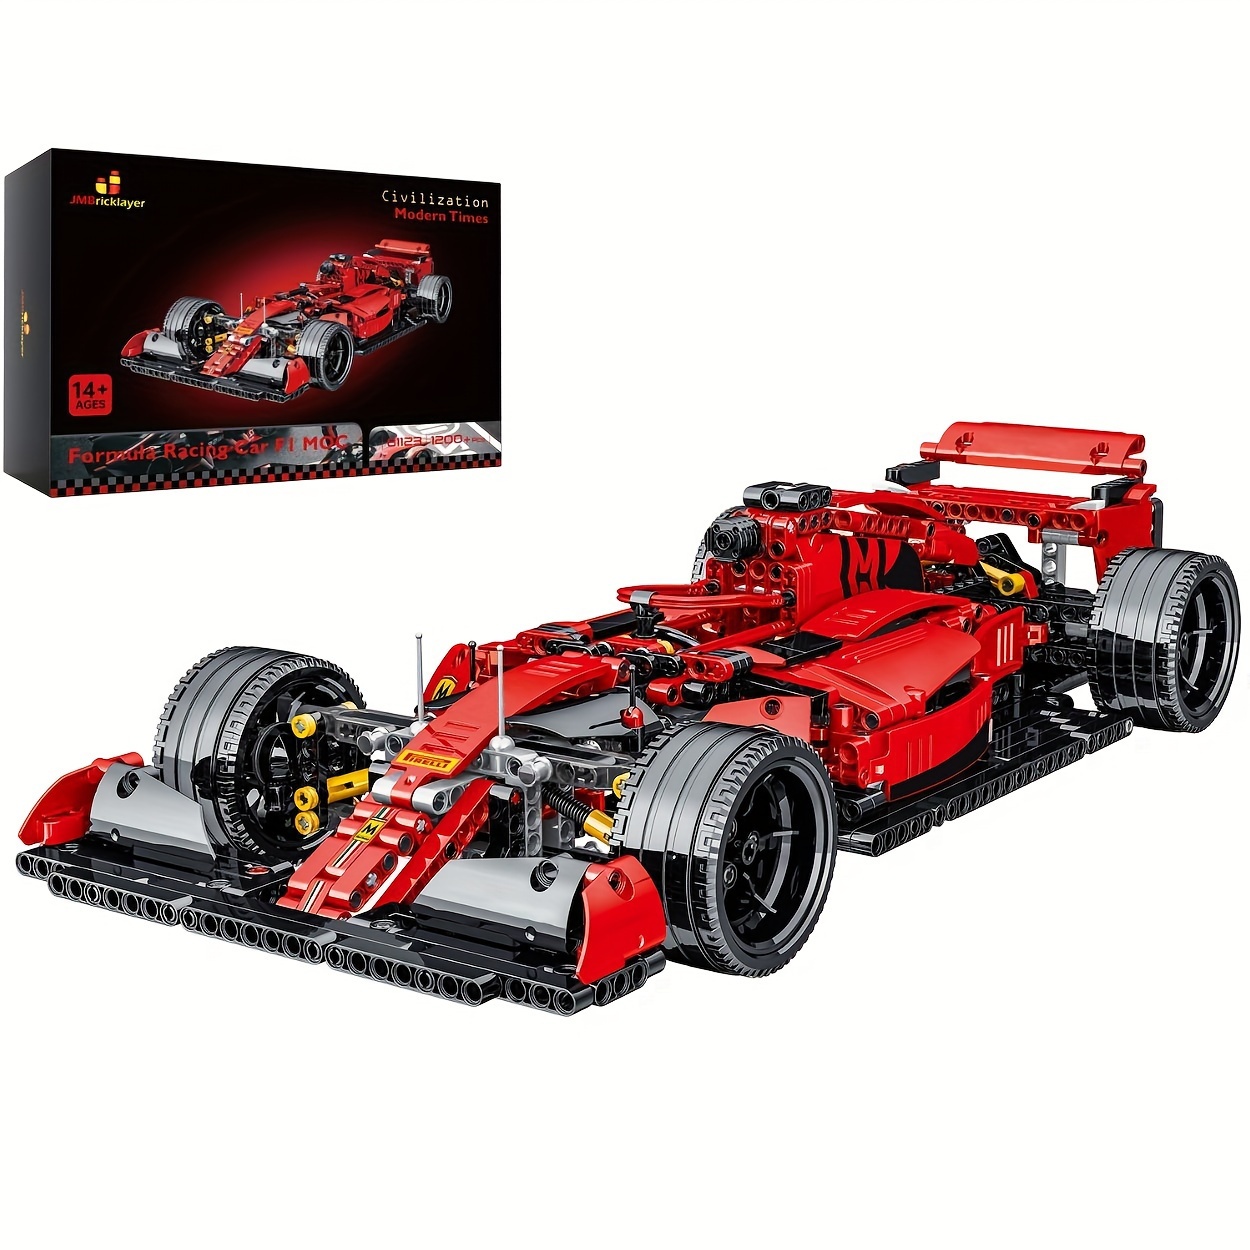 

Rc Red Race Cars Building Sets 61123, 1:10 Moc Remote Control Car Building Blocks, Cool Collectible Model Car Kits Building Brick